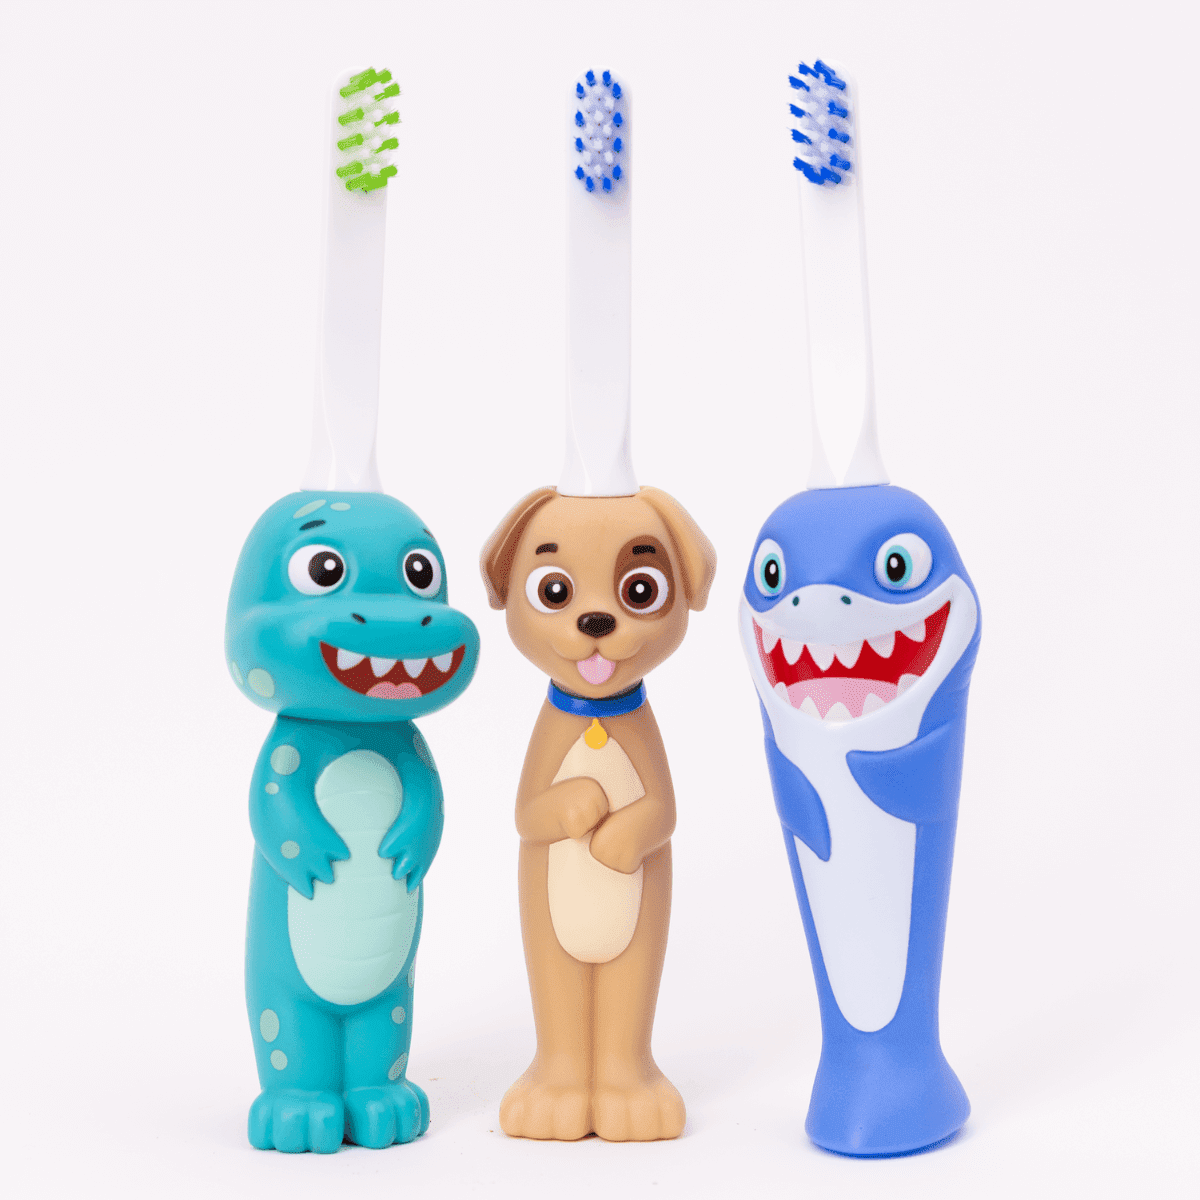 Trio of Brushy the Brushasaurus toothbrushes with fun character designs